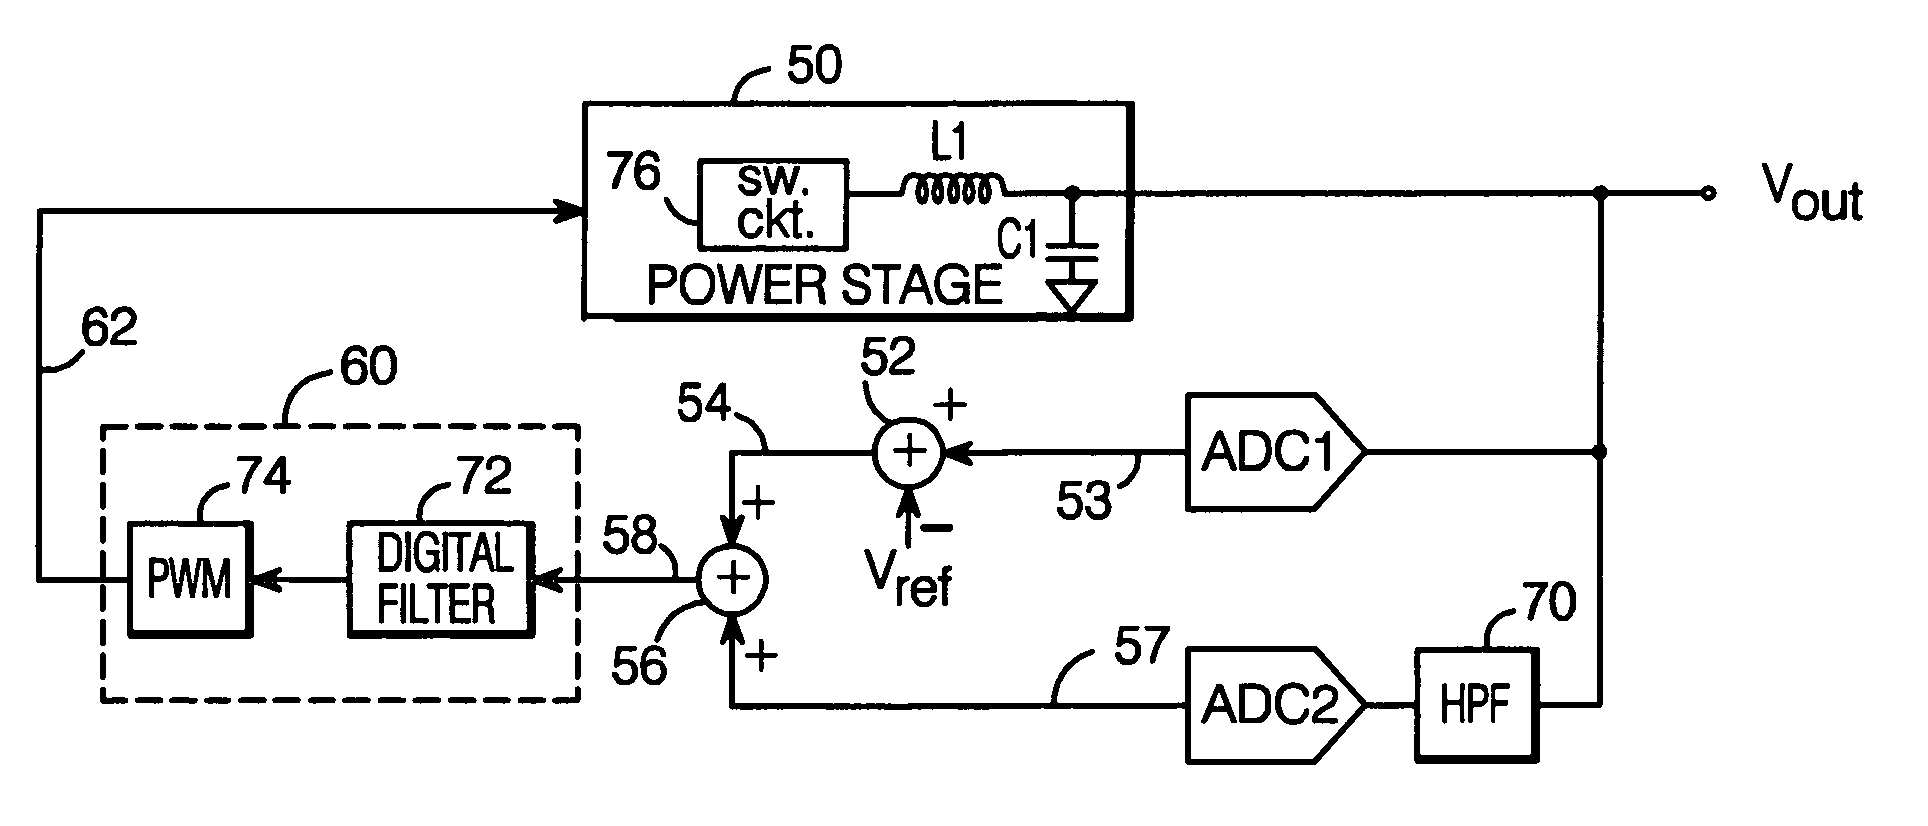 Multi-path digital power supply controller